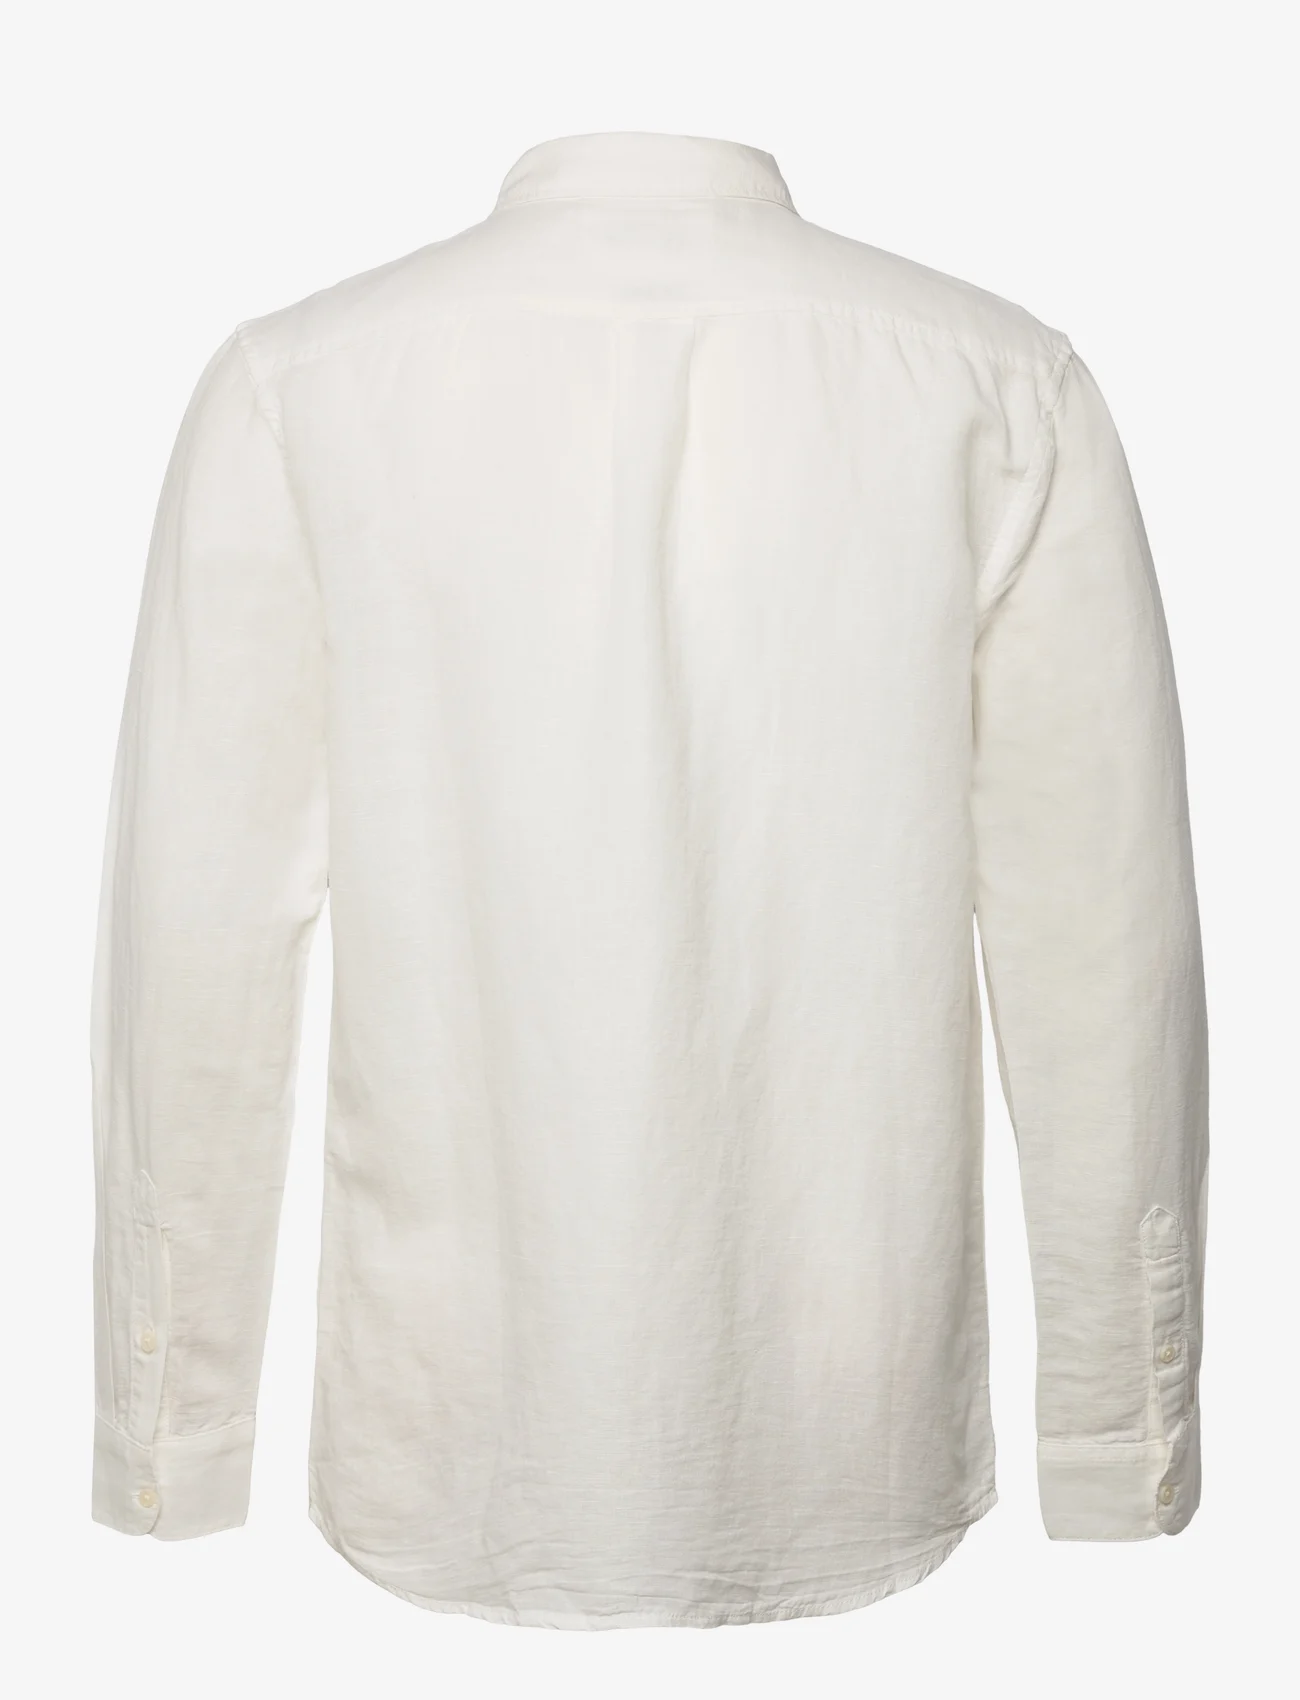 Wrangler - LS 1 PKT SHIRT - linen shirts - worn white - 1